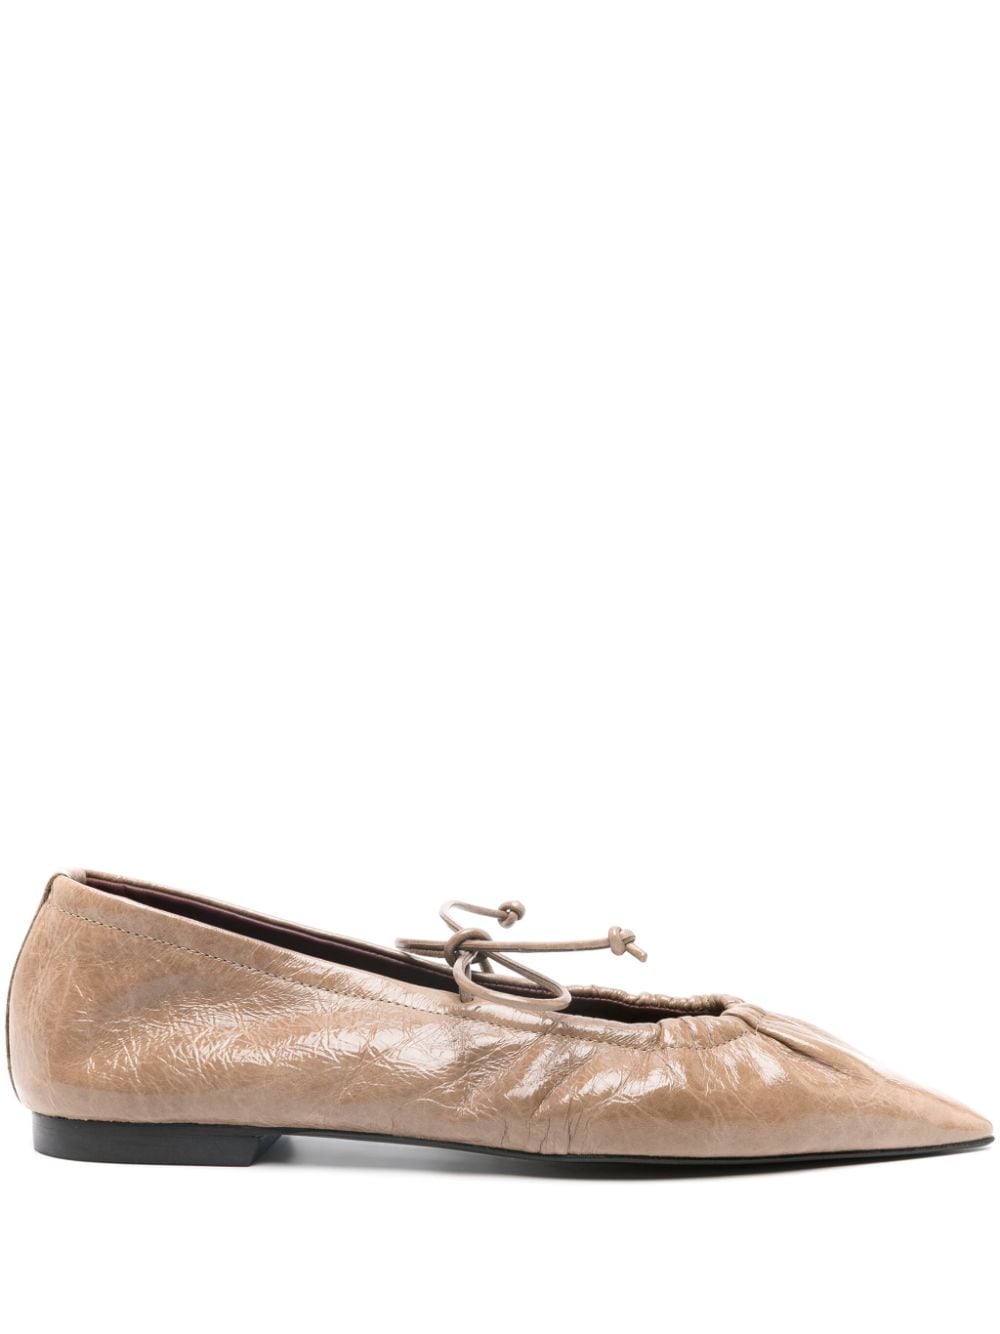 Bimba y Lola pointed-toe leather Ballerina shoes - Brown von Bimba y Lola